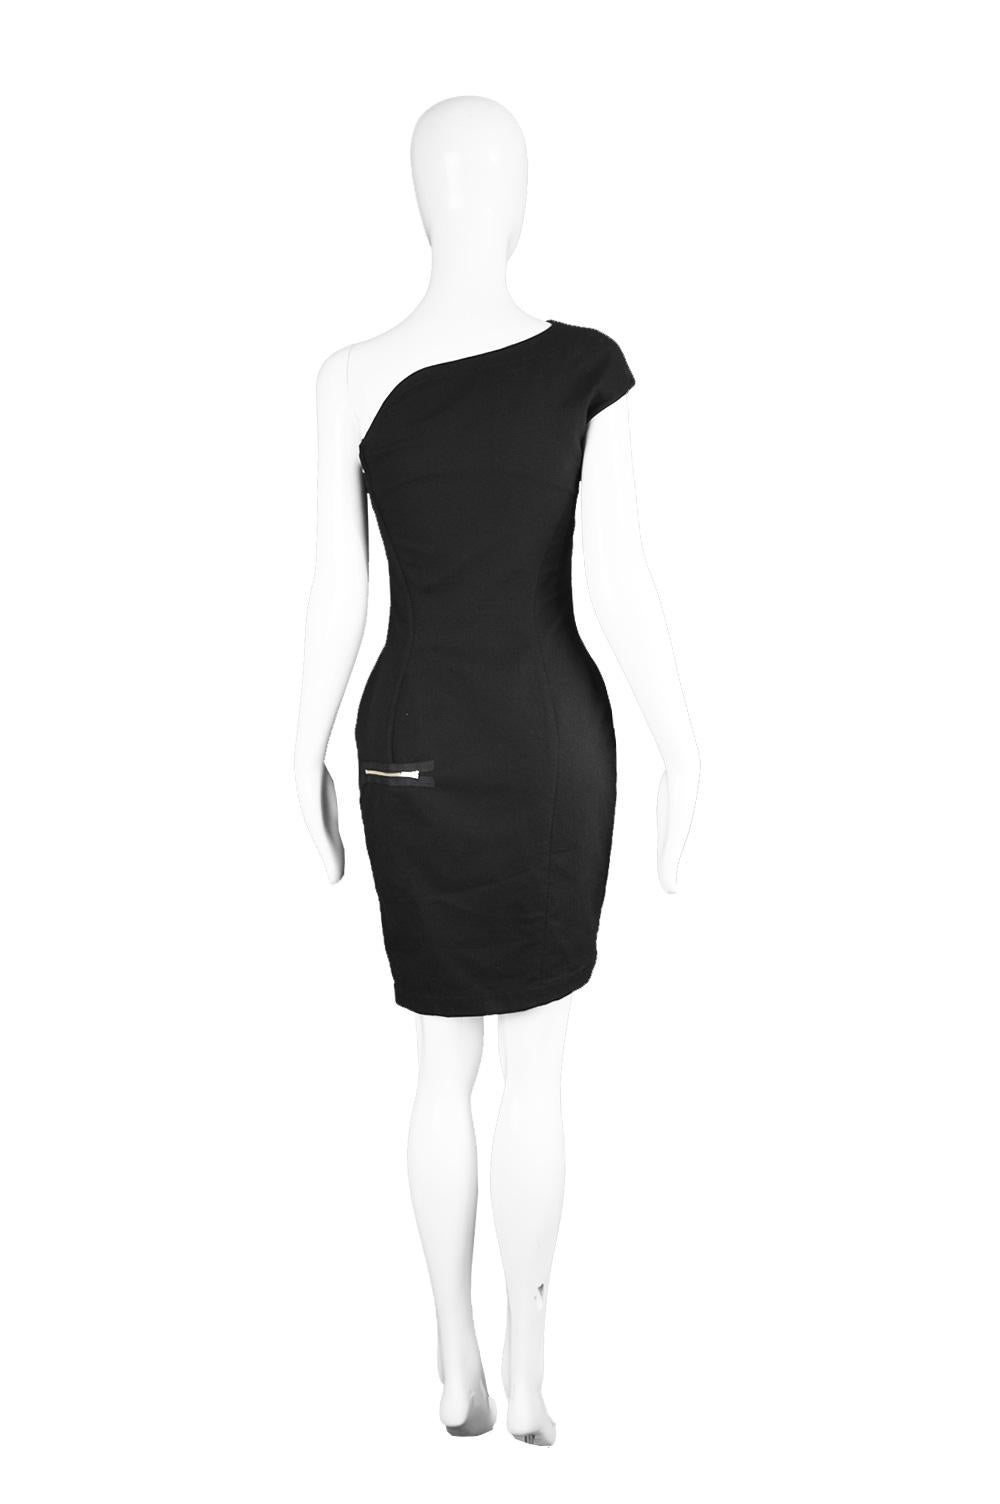 Thierry Mugler Sculptural One Shoulder Vintage Black Cotton Party Dress, 1980s For Sale 4